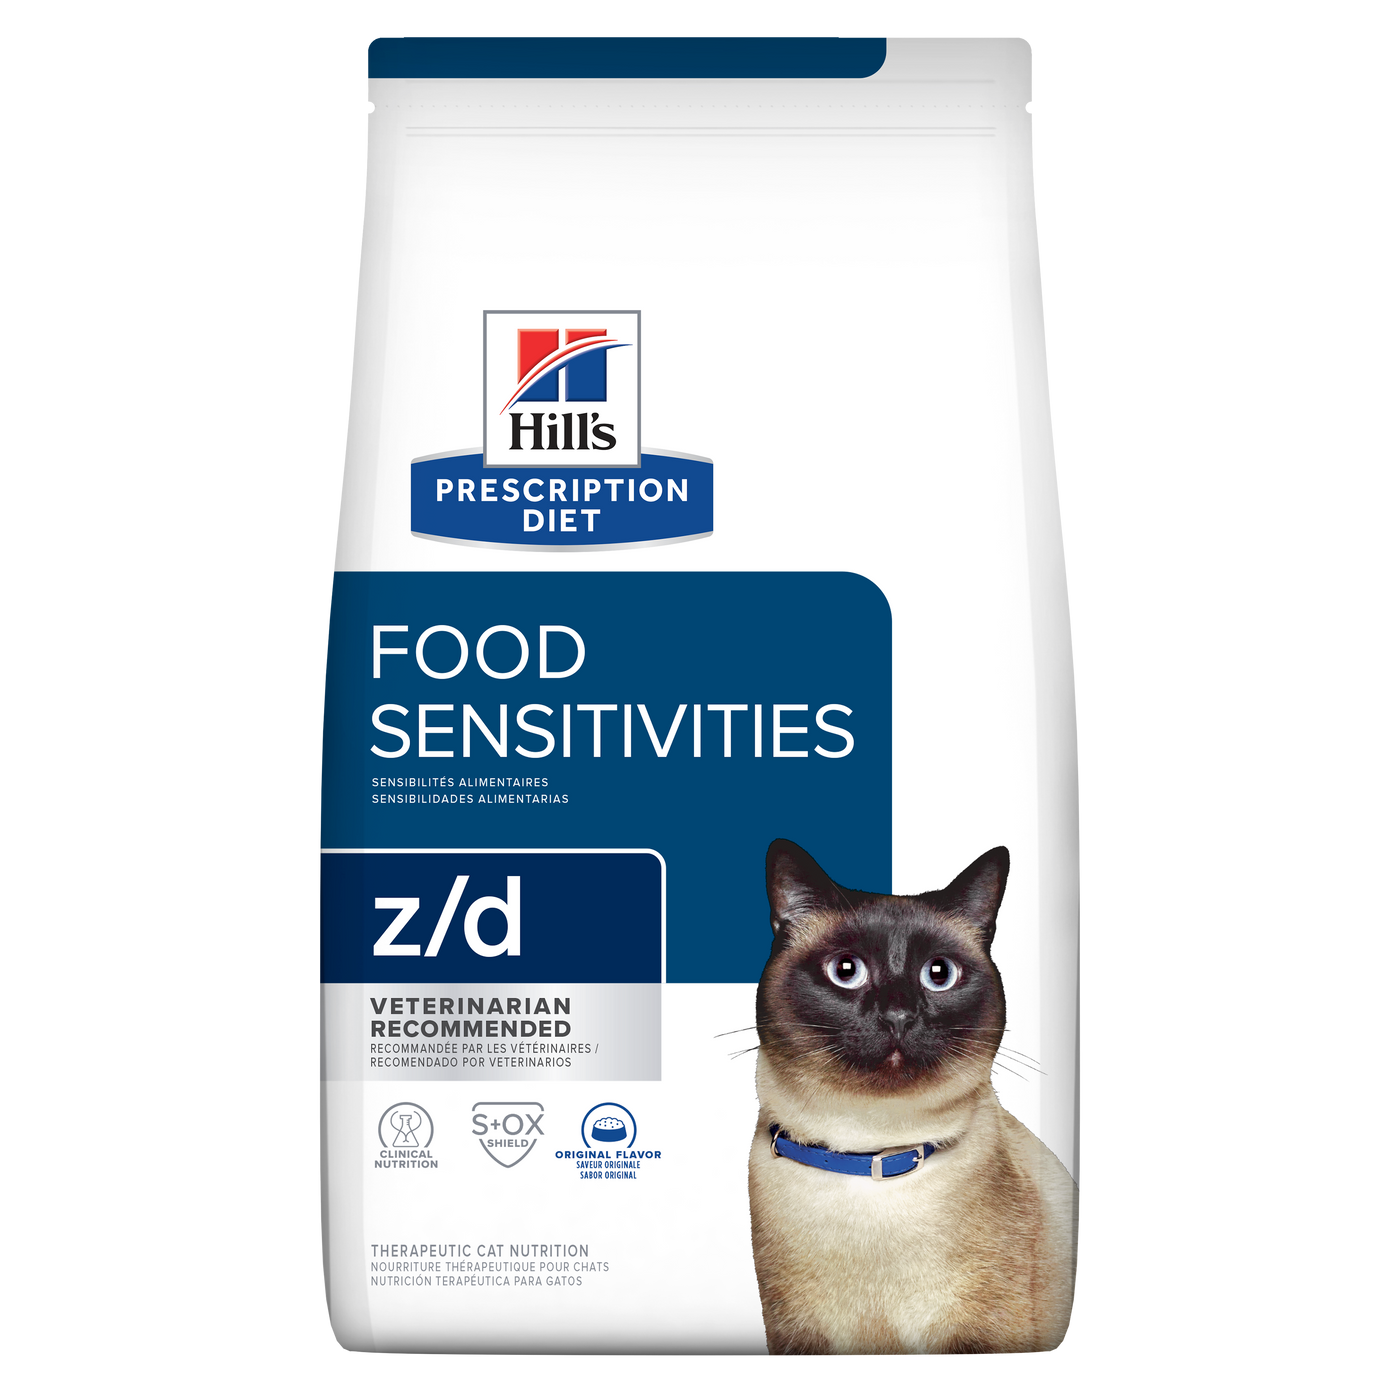 Hill's 希爾思處方食品 - z/d 貓用低過敏原配方 4磅